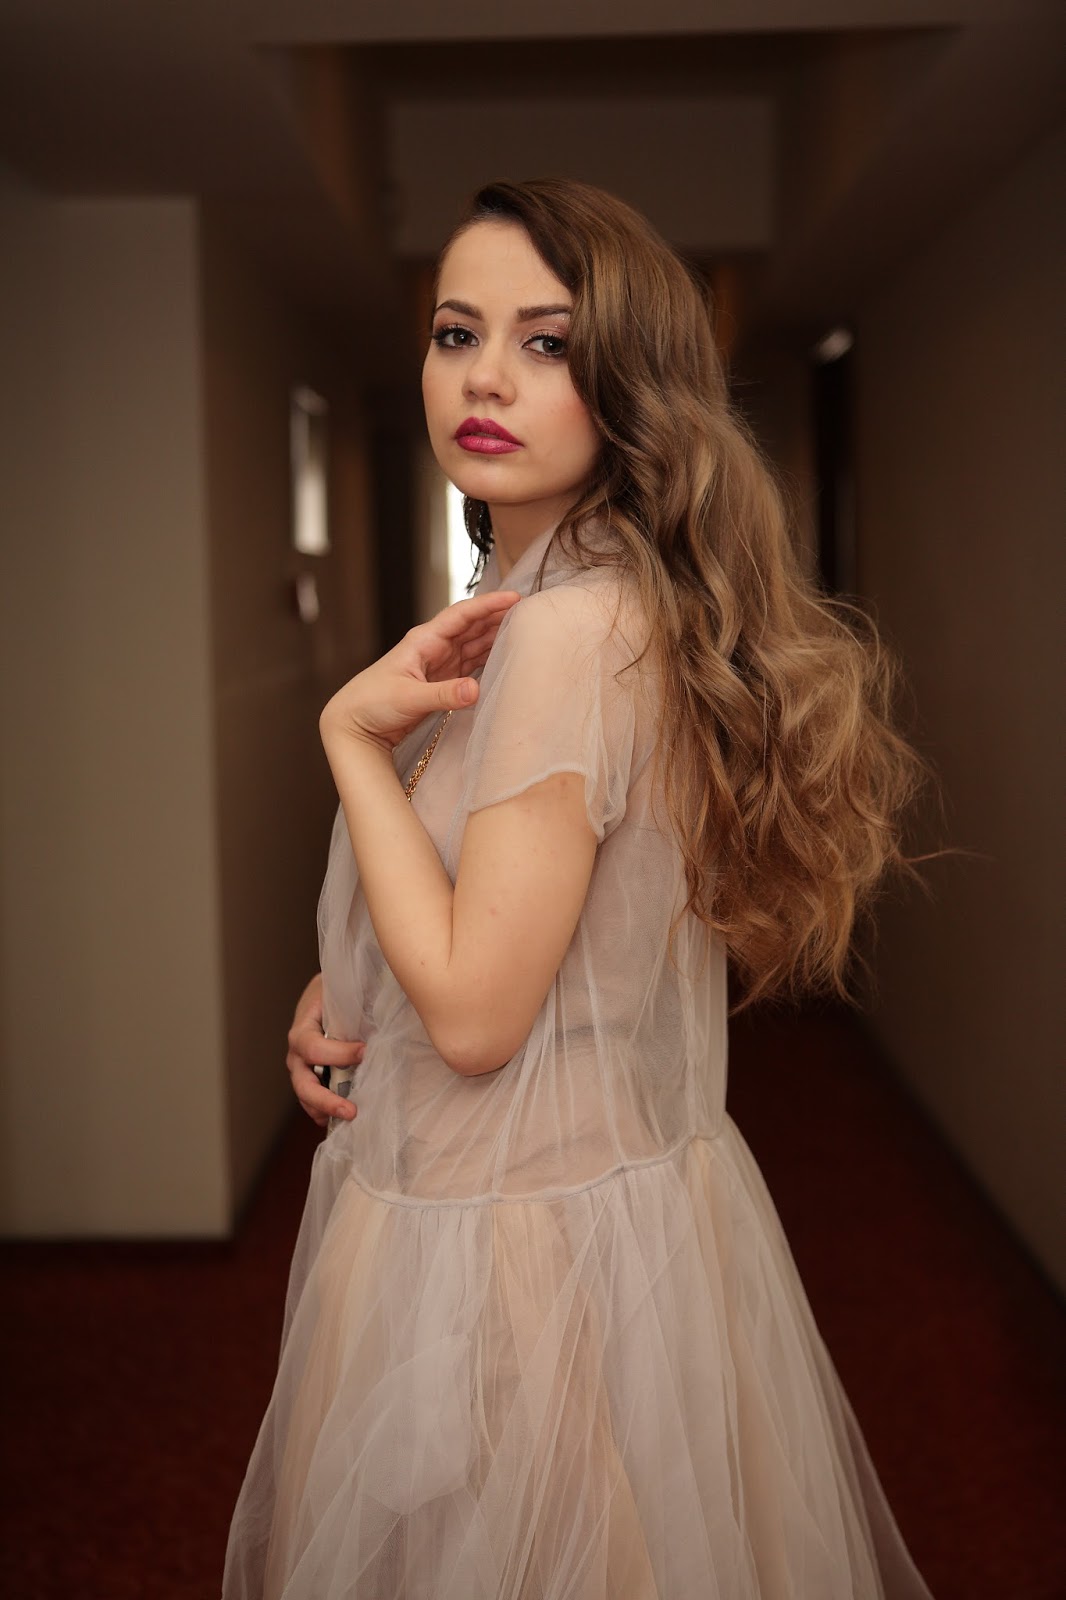 Beauty Belle Notes - Romanian beauty blog focusing on 